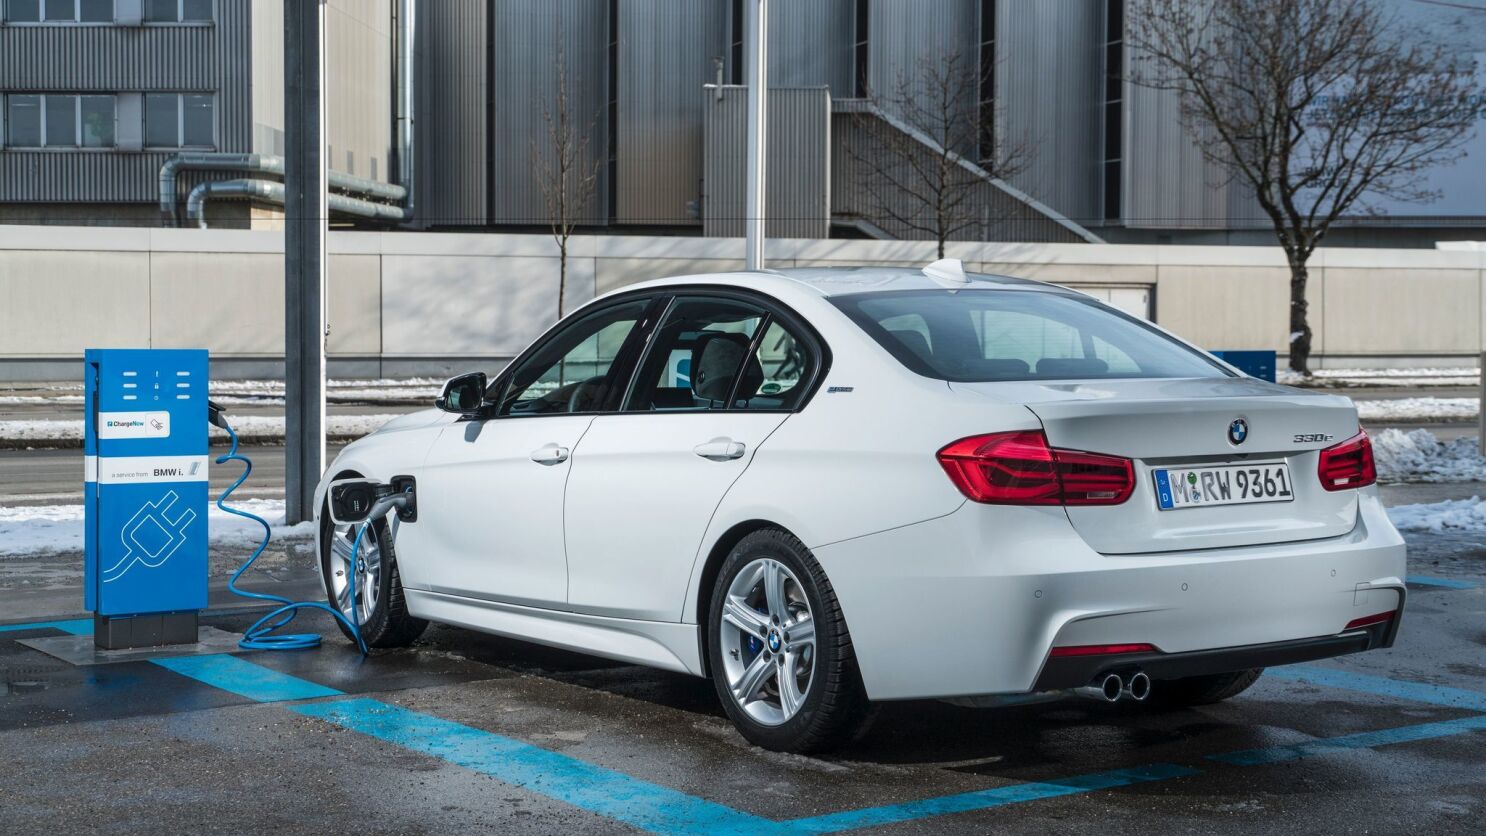 2017 BMW 330e iPerformance plug-in hybrid - The San Diego Union-Tribune